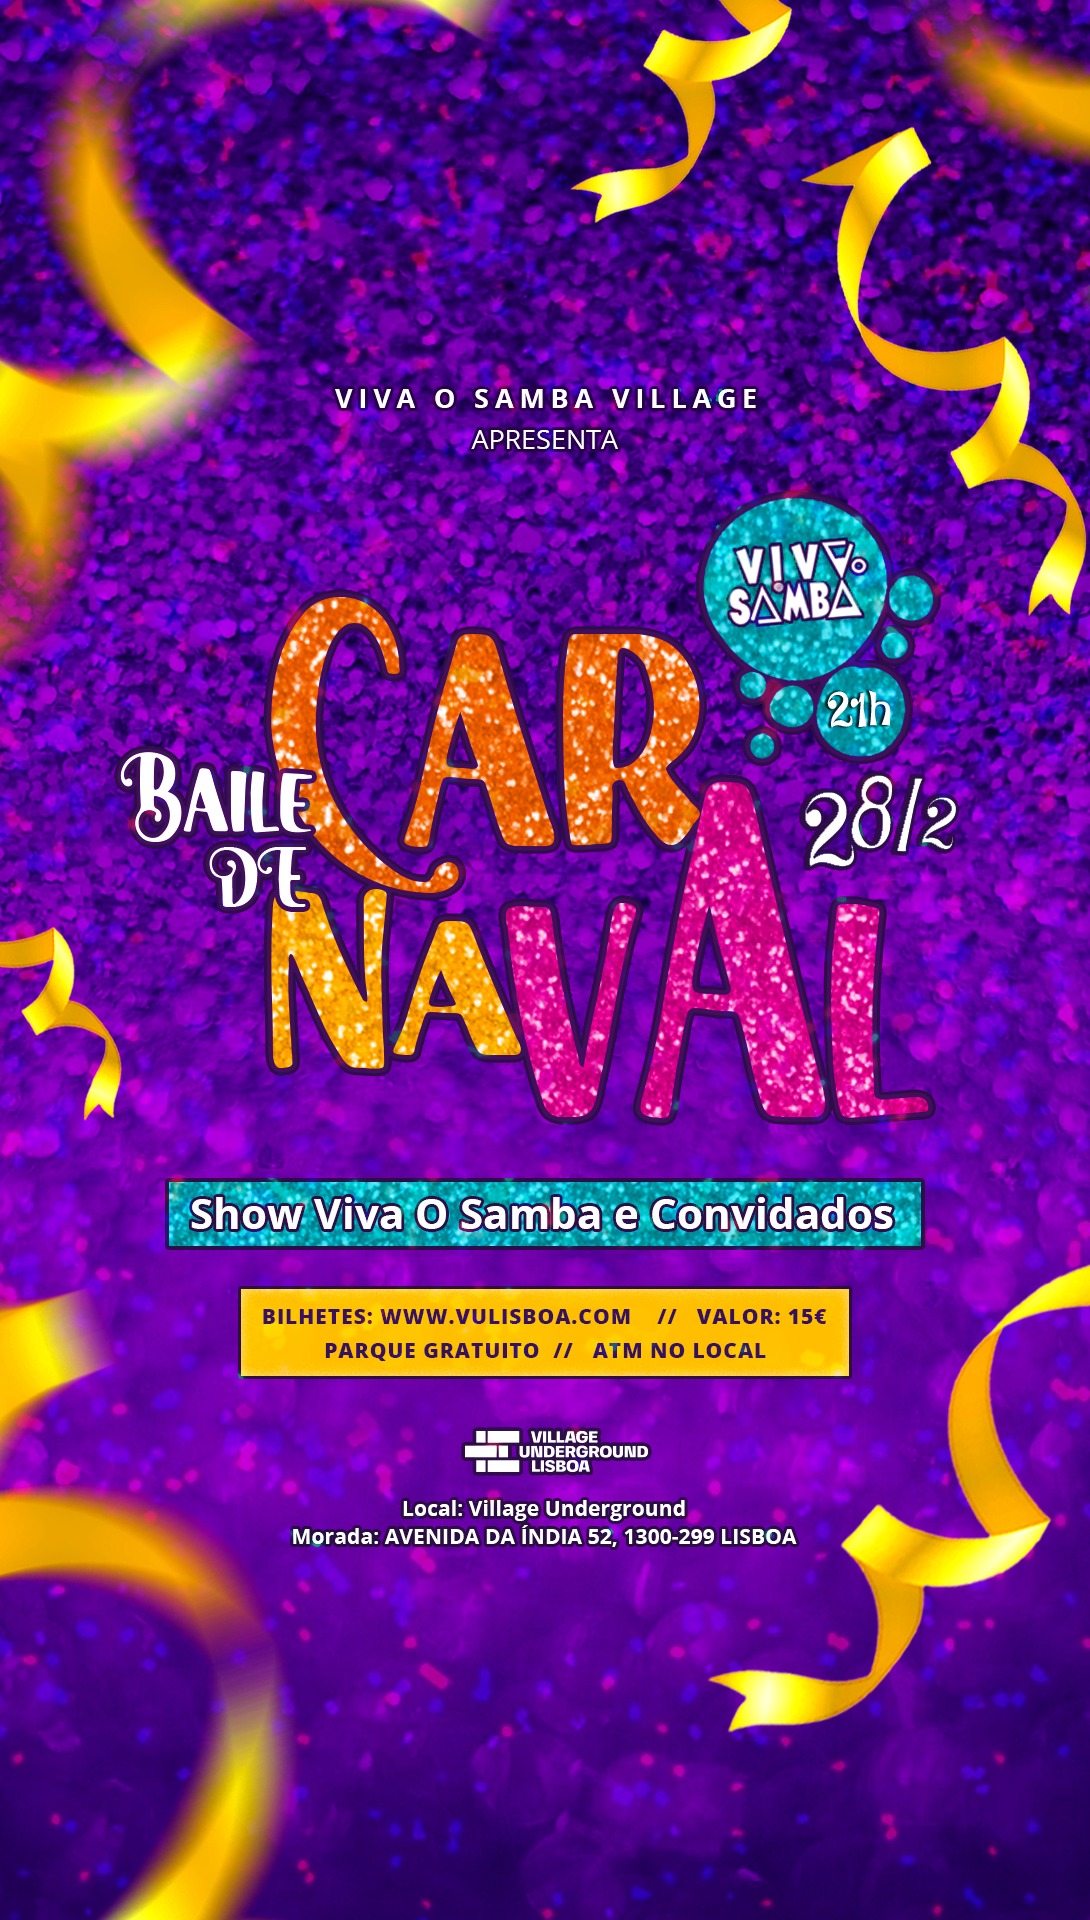 Viva O Samba - Baile de Carnaval - Village Underground Lisboa